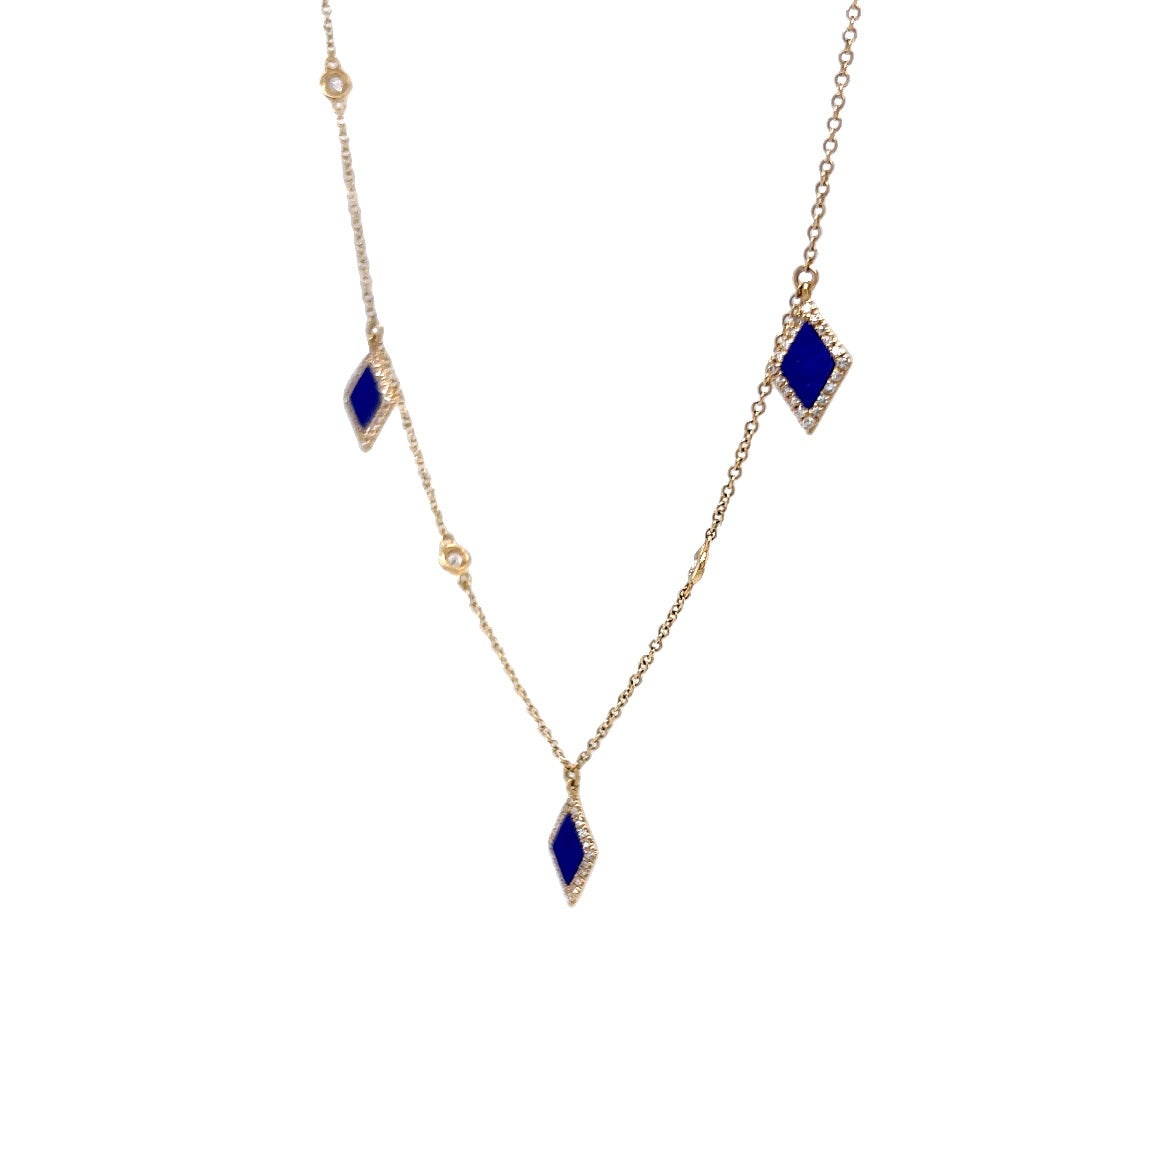 Lapis Lazuli & Diamond Necklace in 14k Yellow Gold